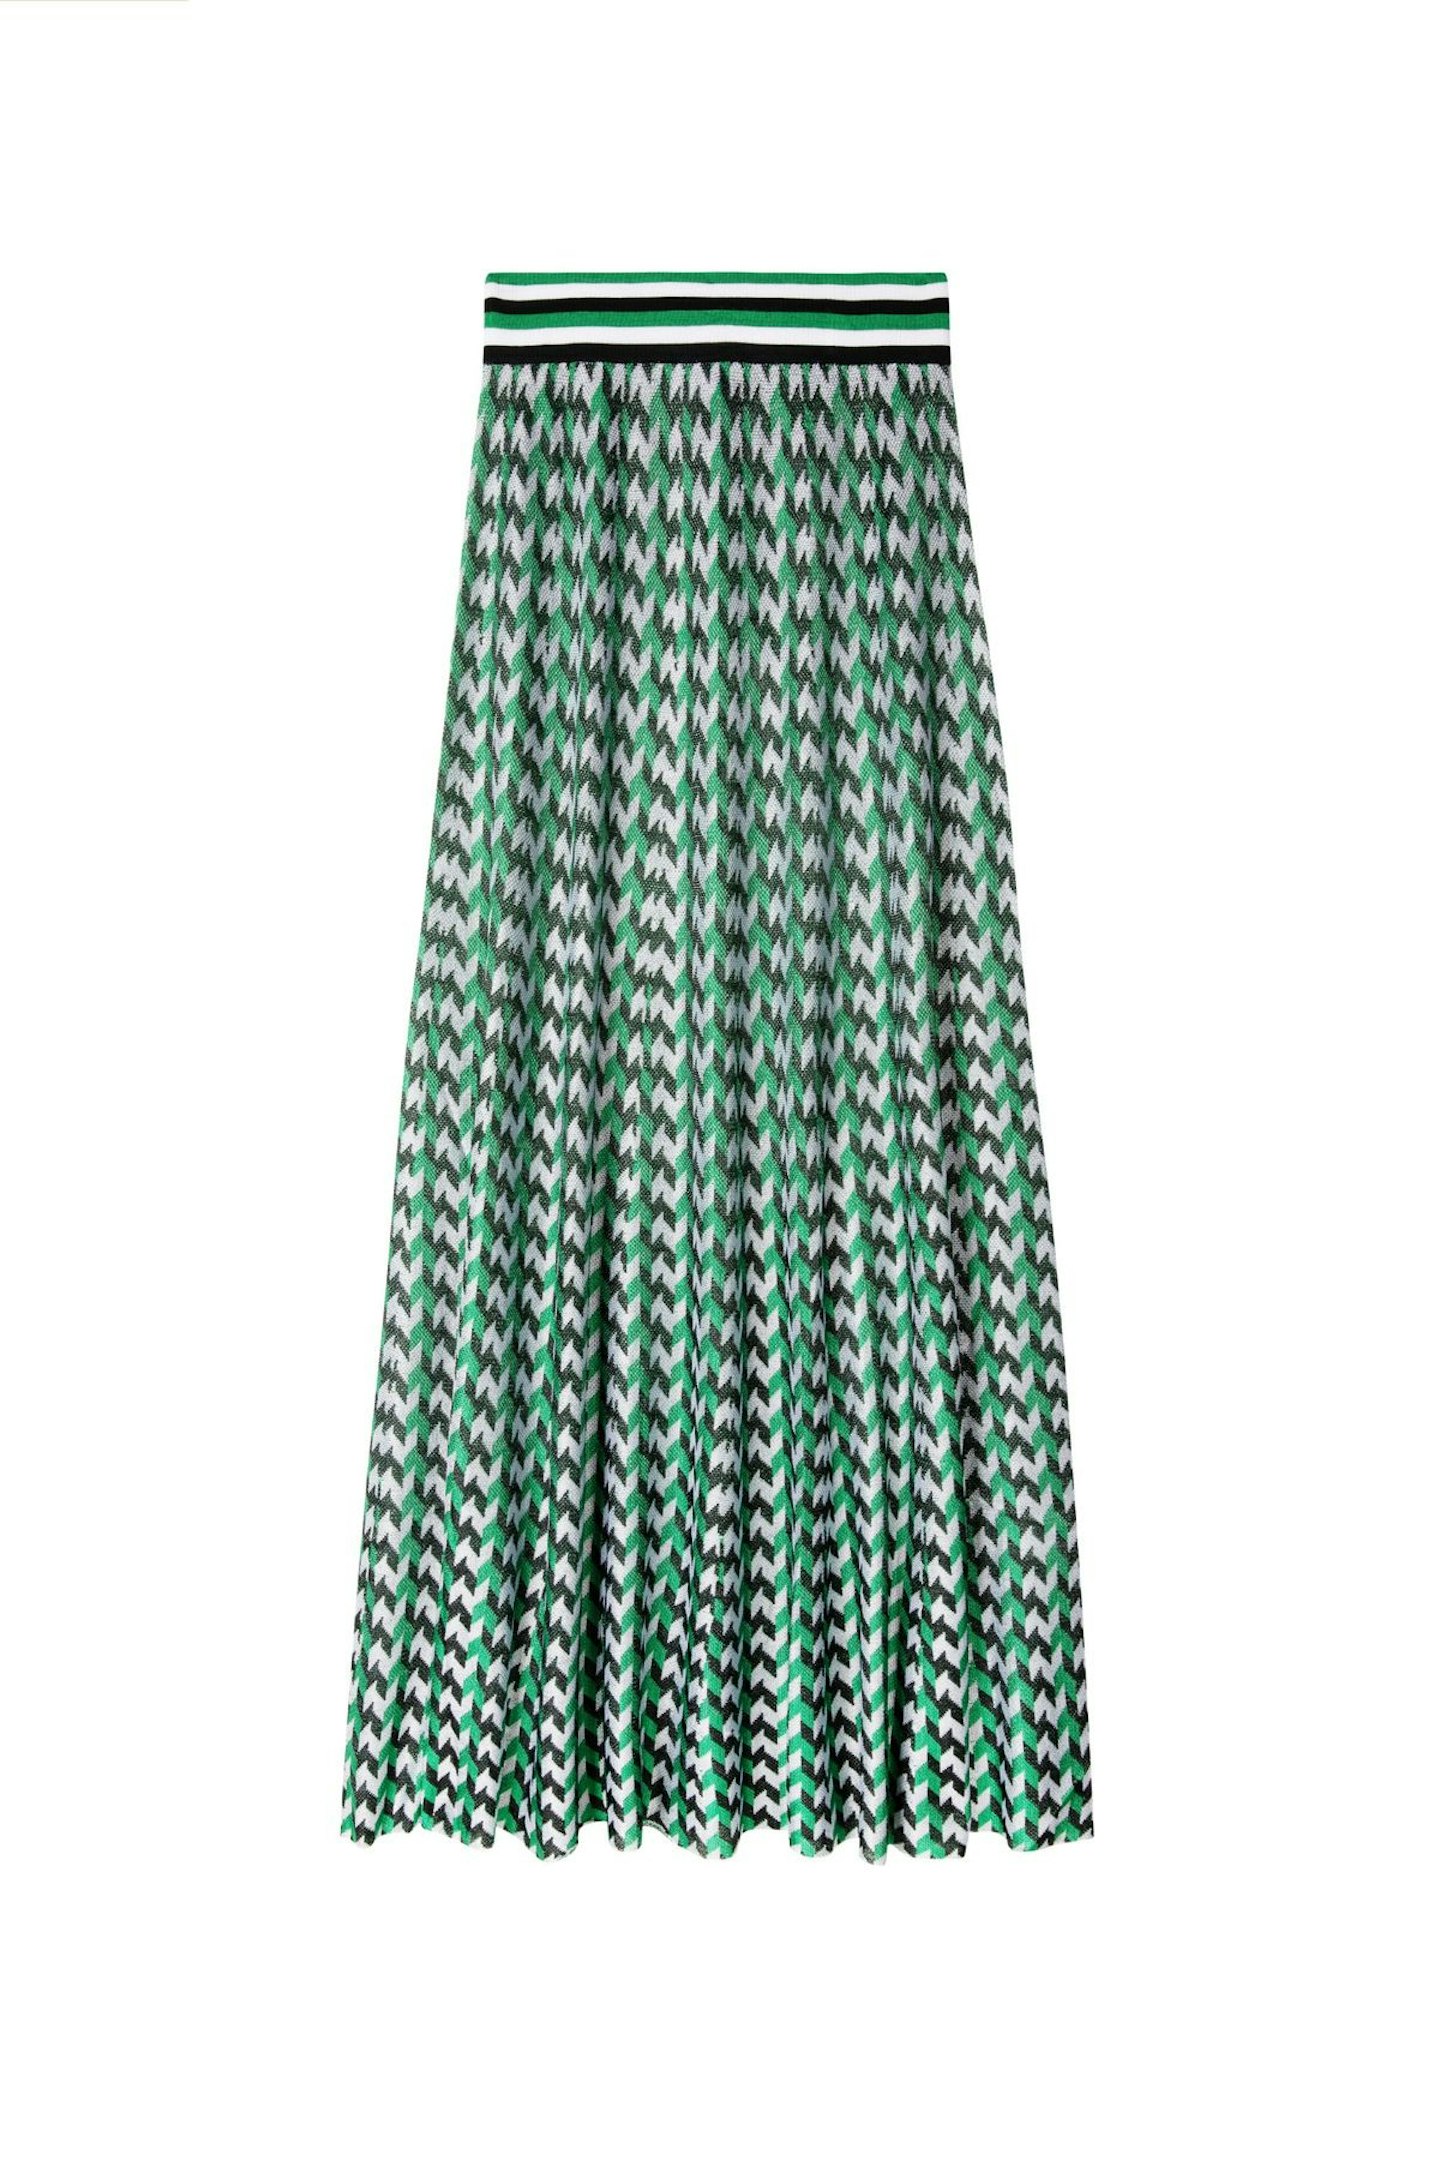 Rixo, Brandy Midi Knit Skirt, £265